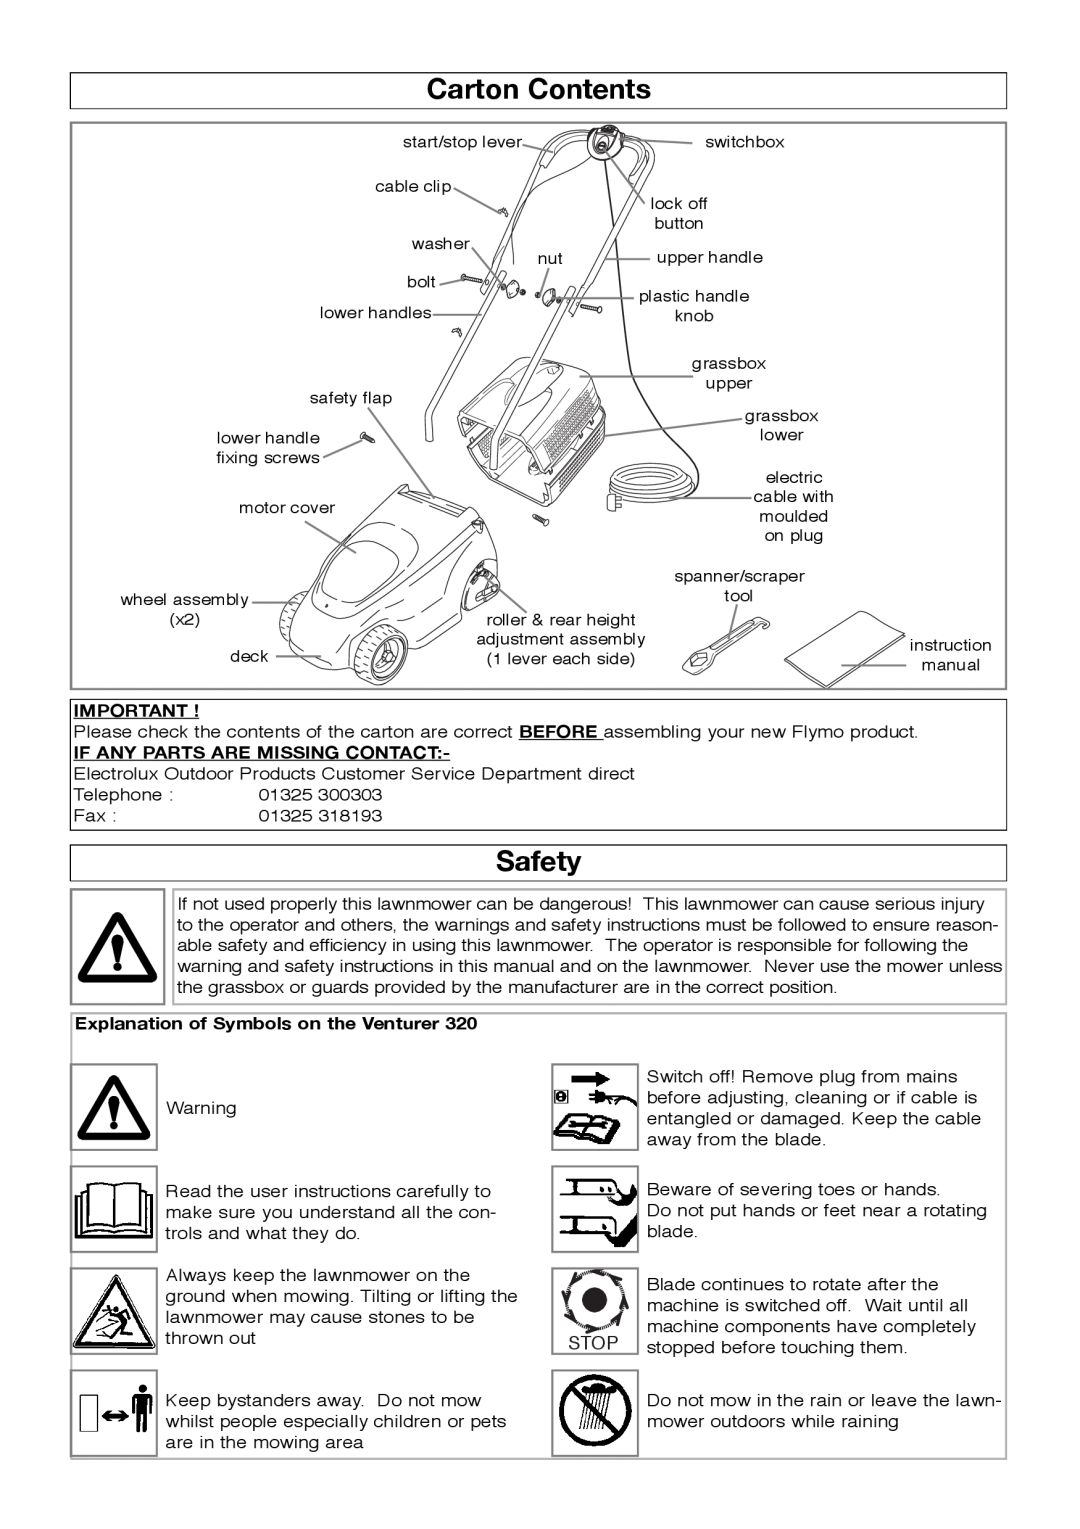 Flymo 320 manual Carton Contents, Safety, Stop 